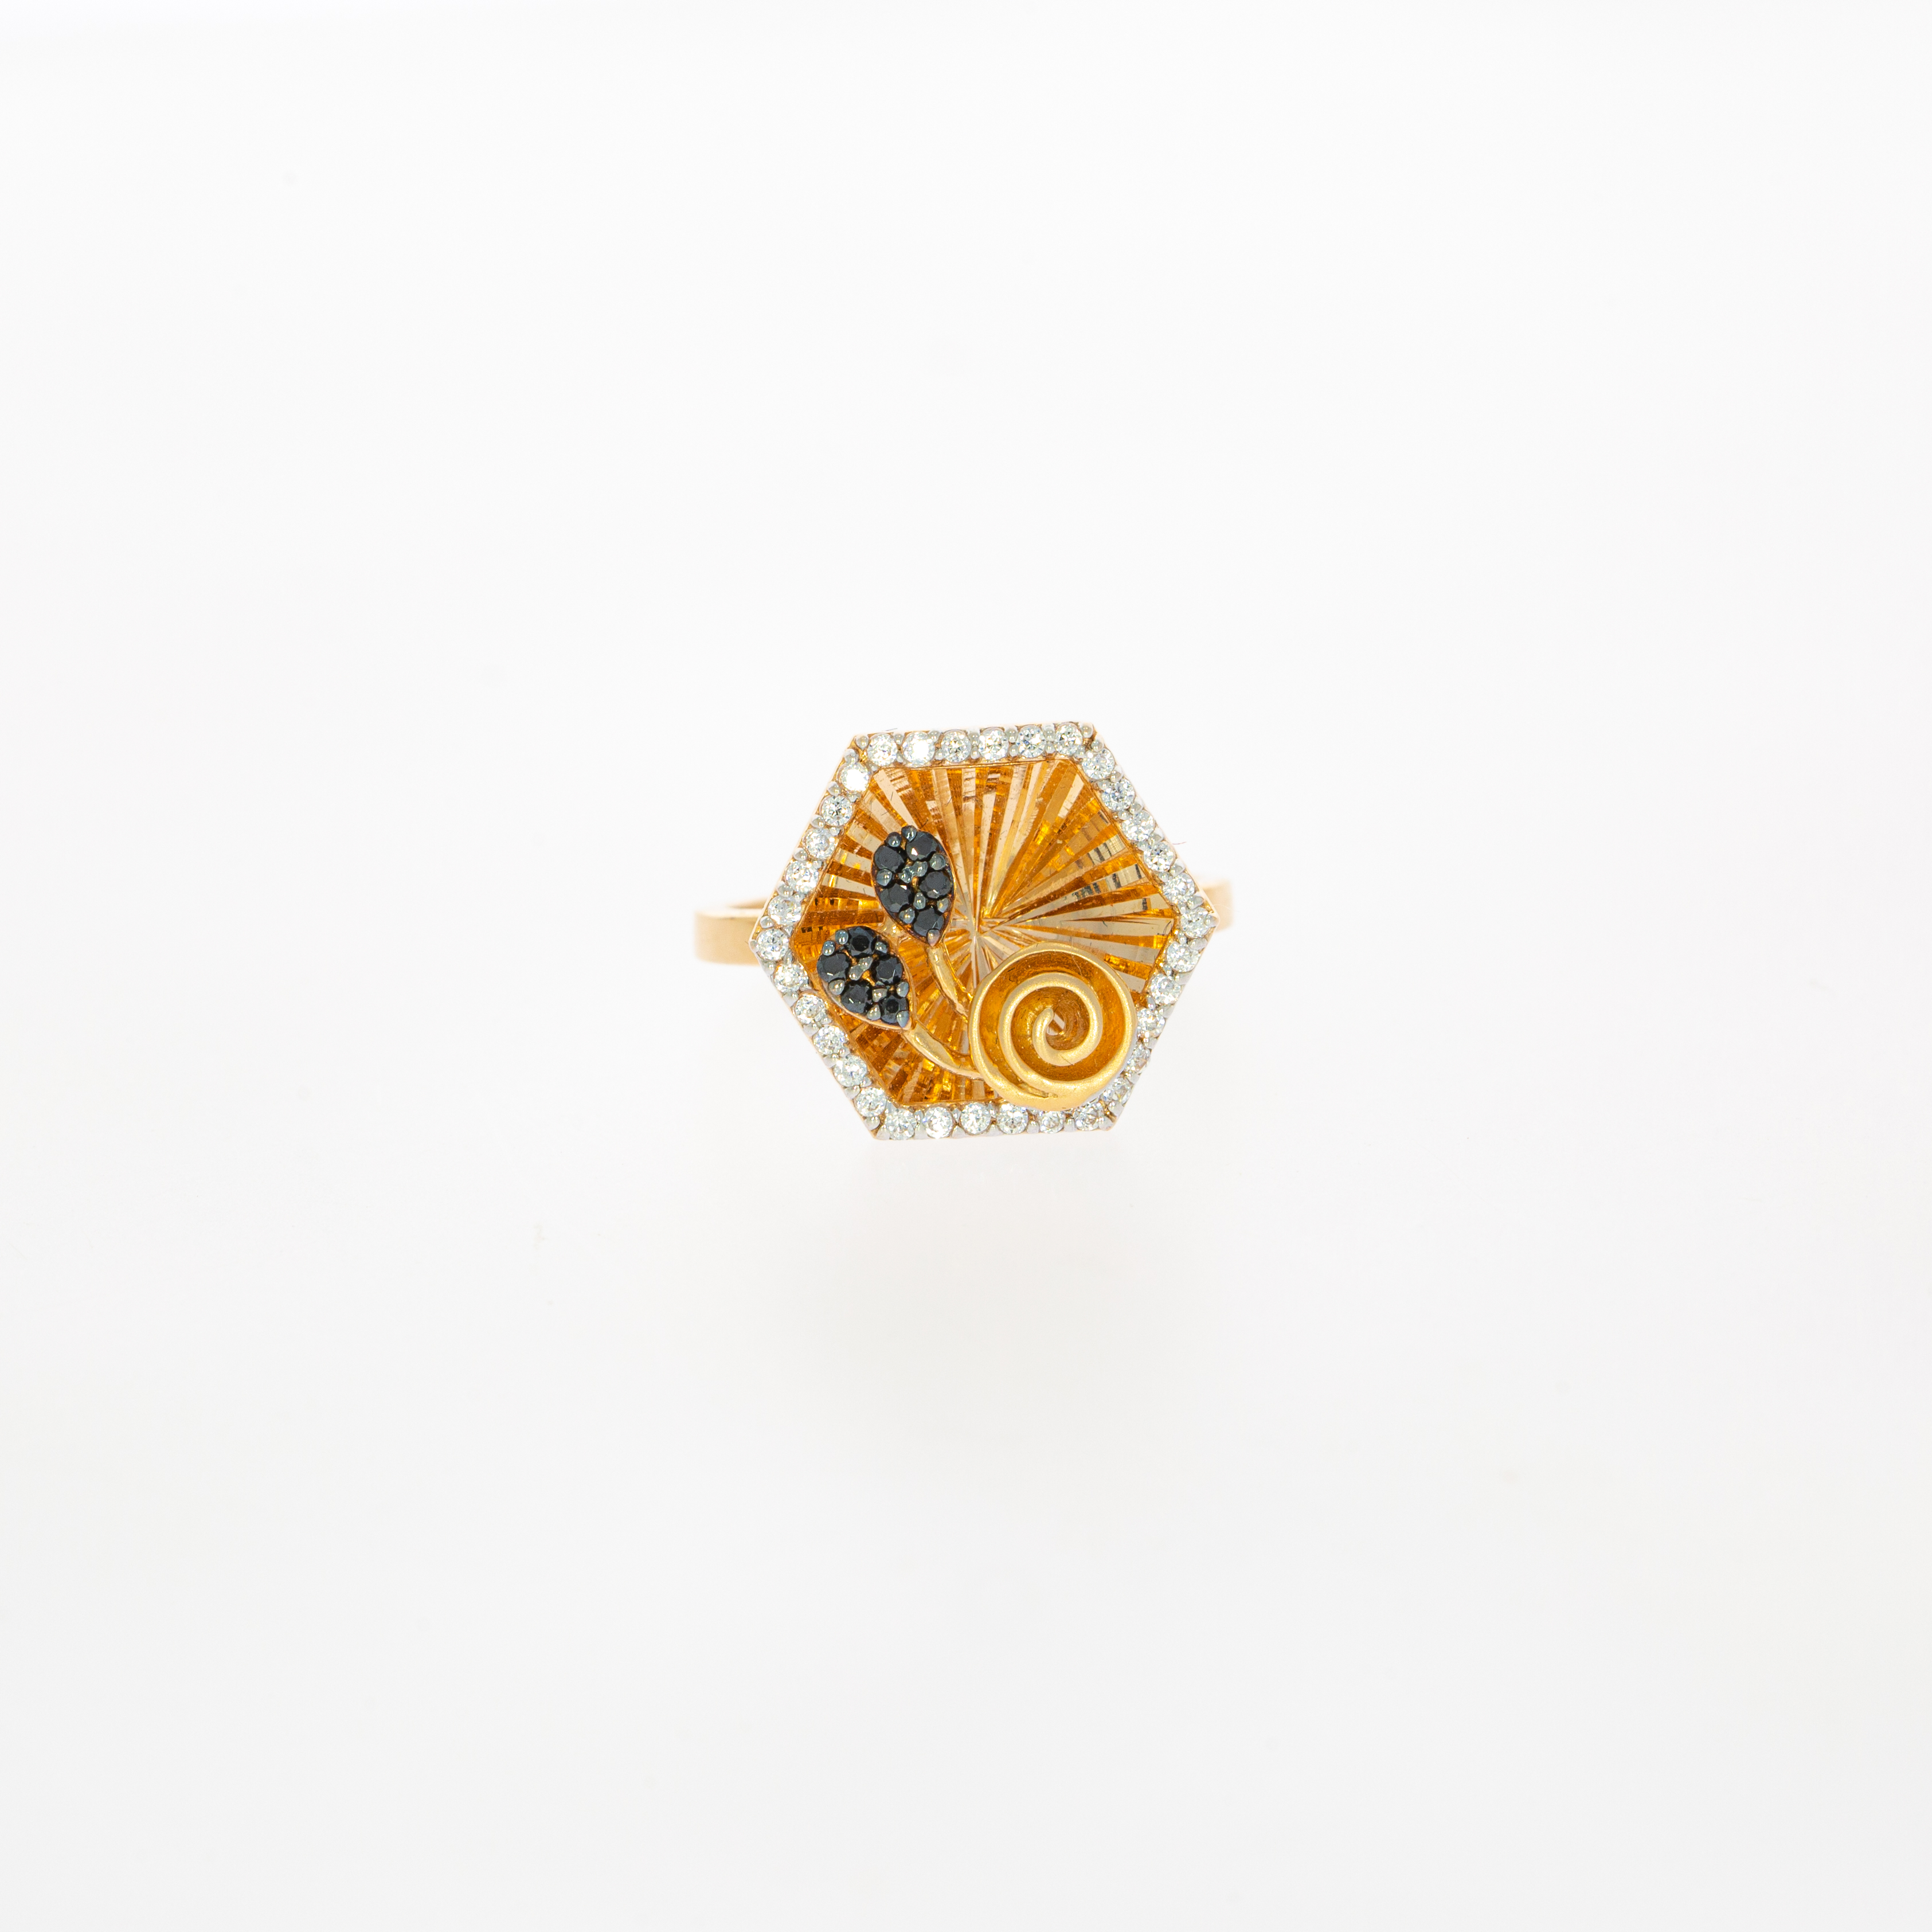 Rose gold 18kt beautiful ring